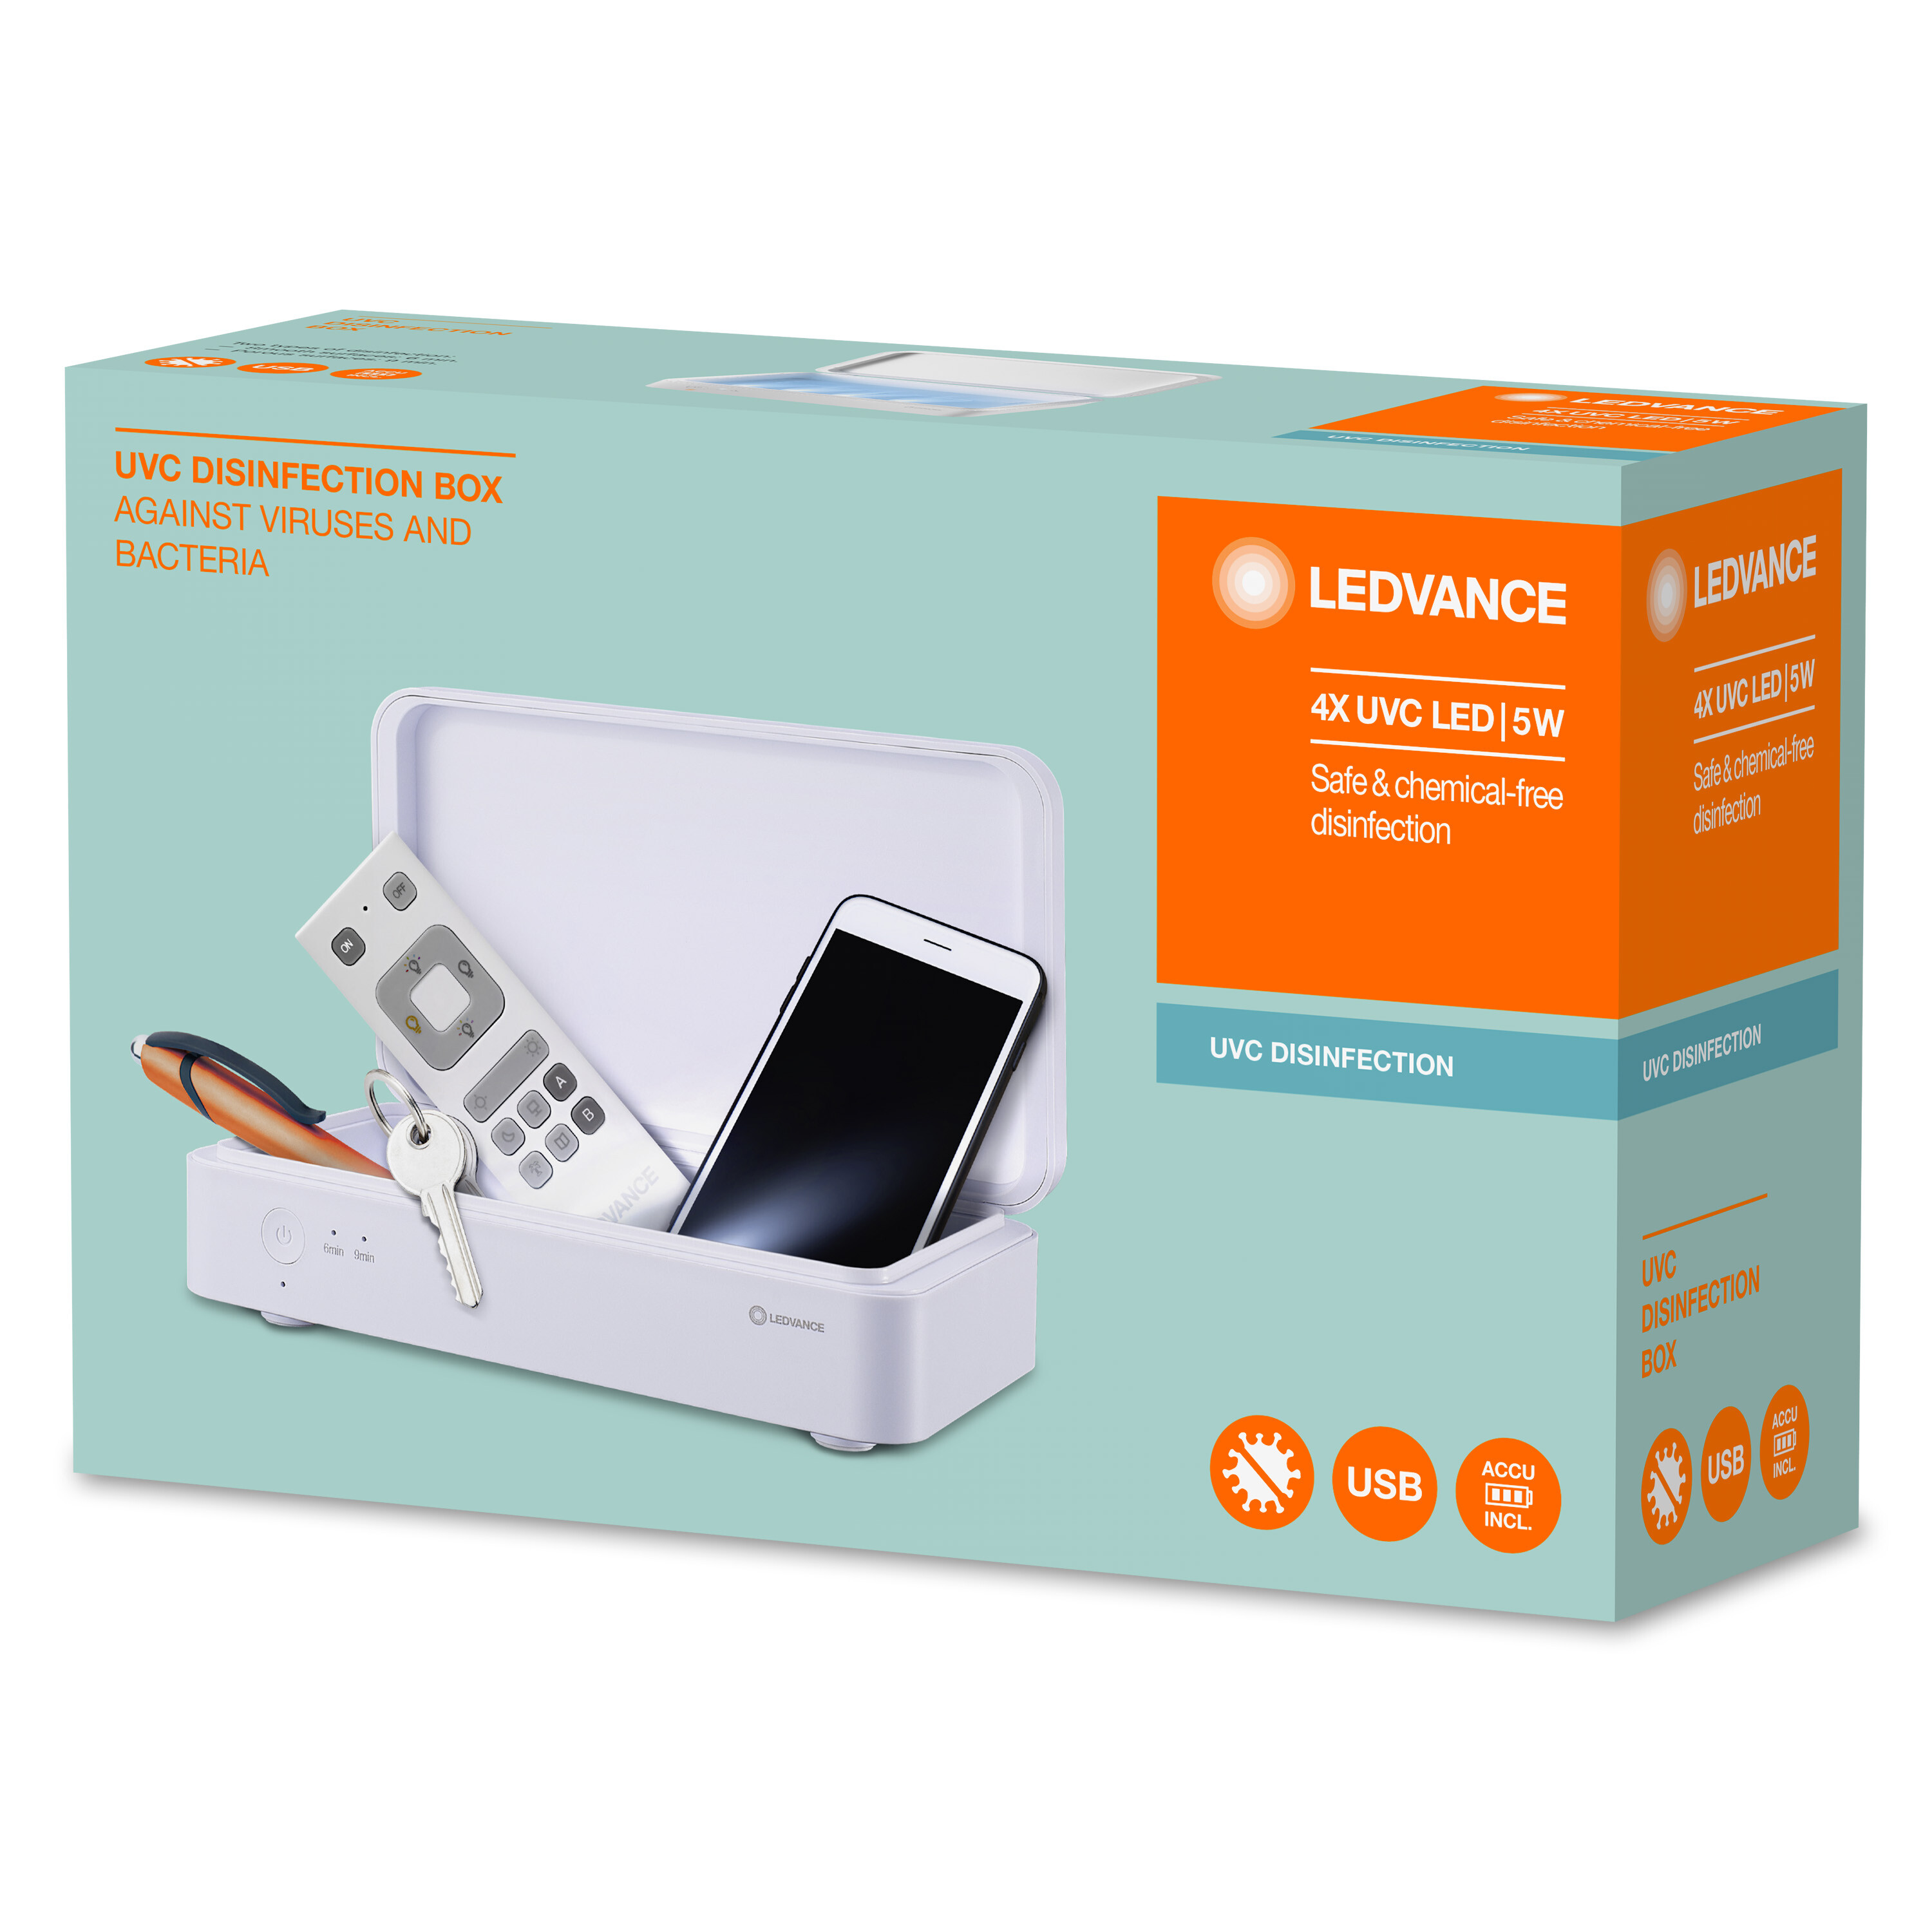 LEDVANCE UVC LED BOX DISINFECTION Desinfektions Box